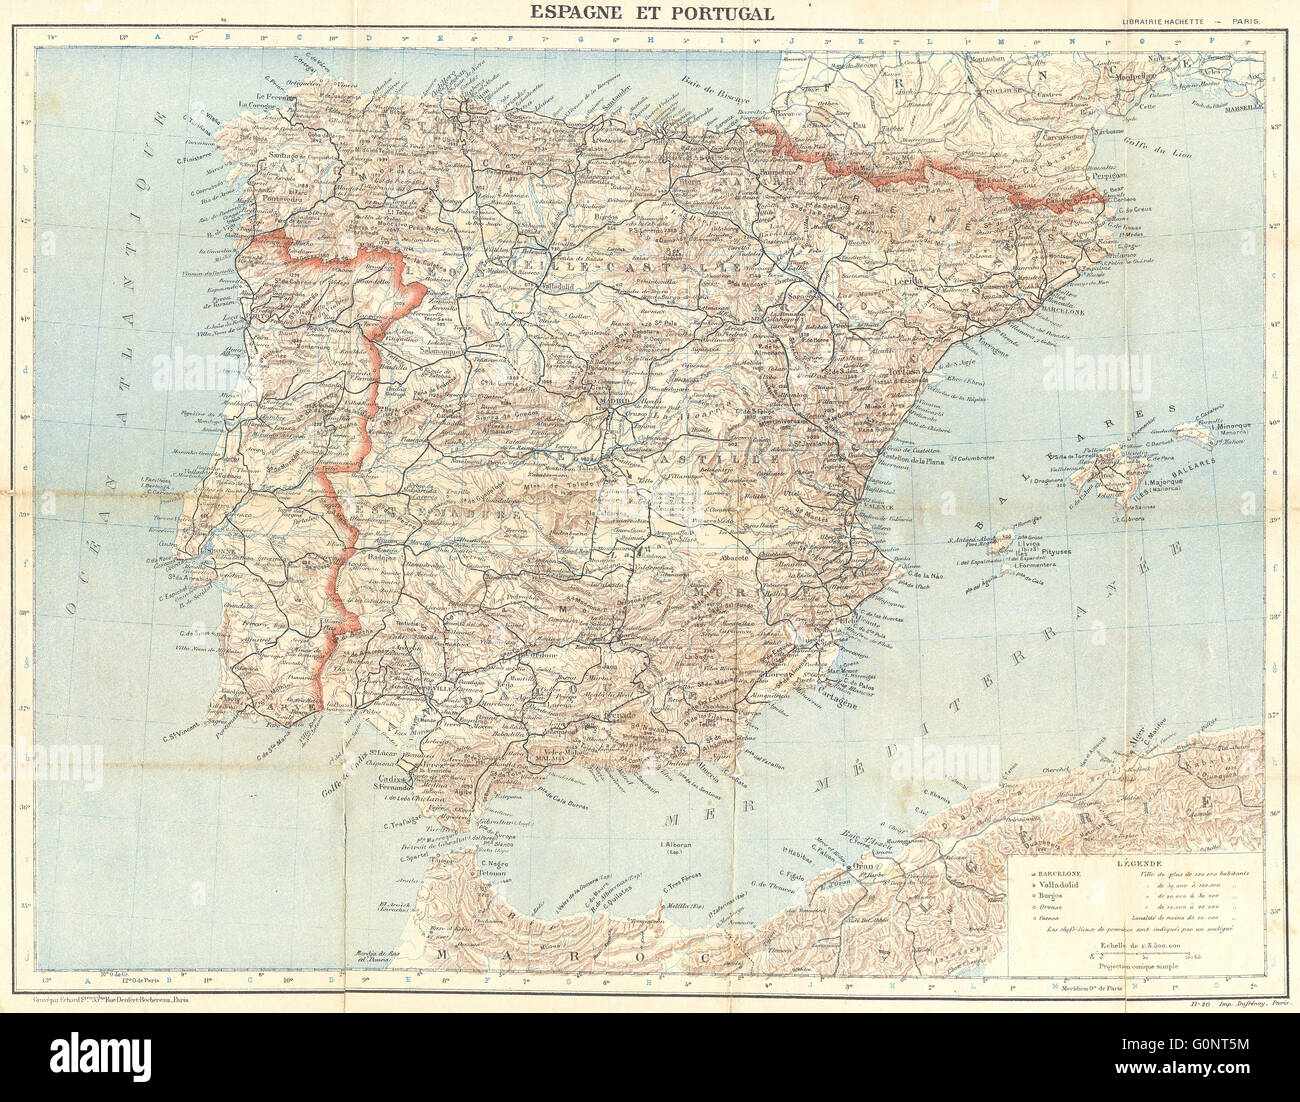 PORTUGAL: Espagne(Spain), 1921 vintage map Stock Photo